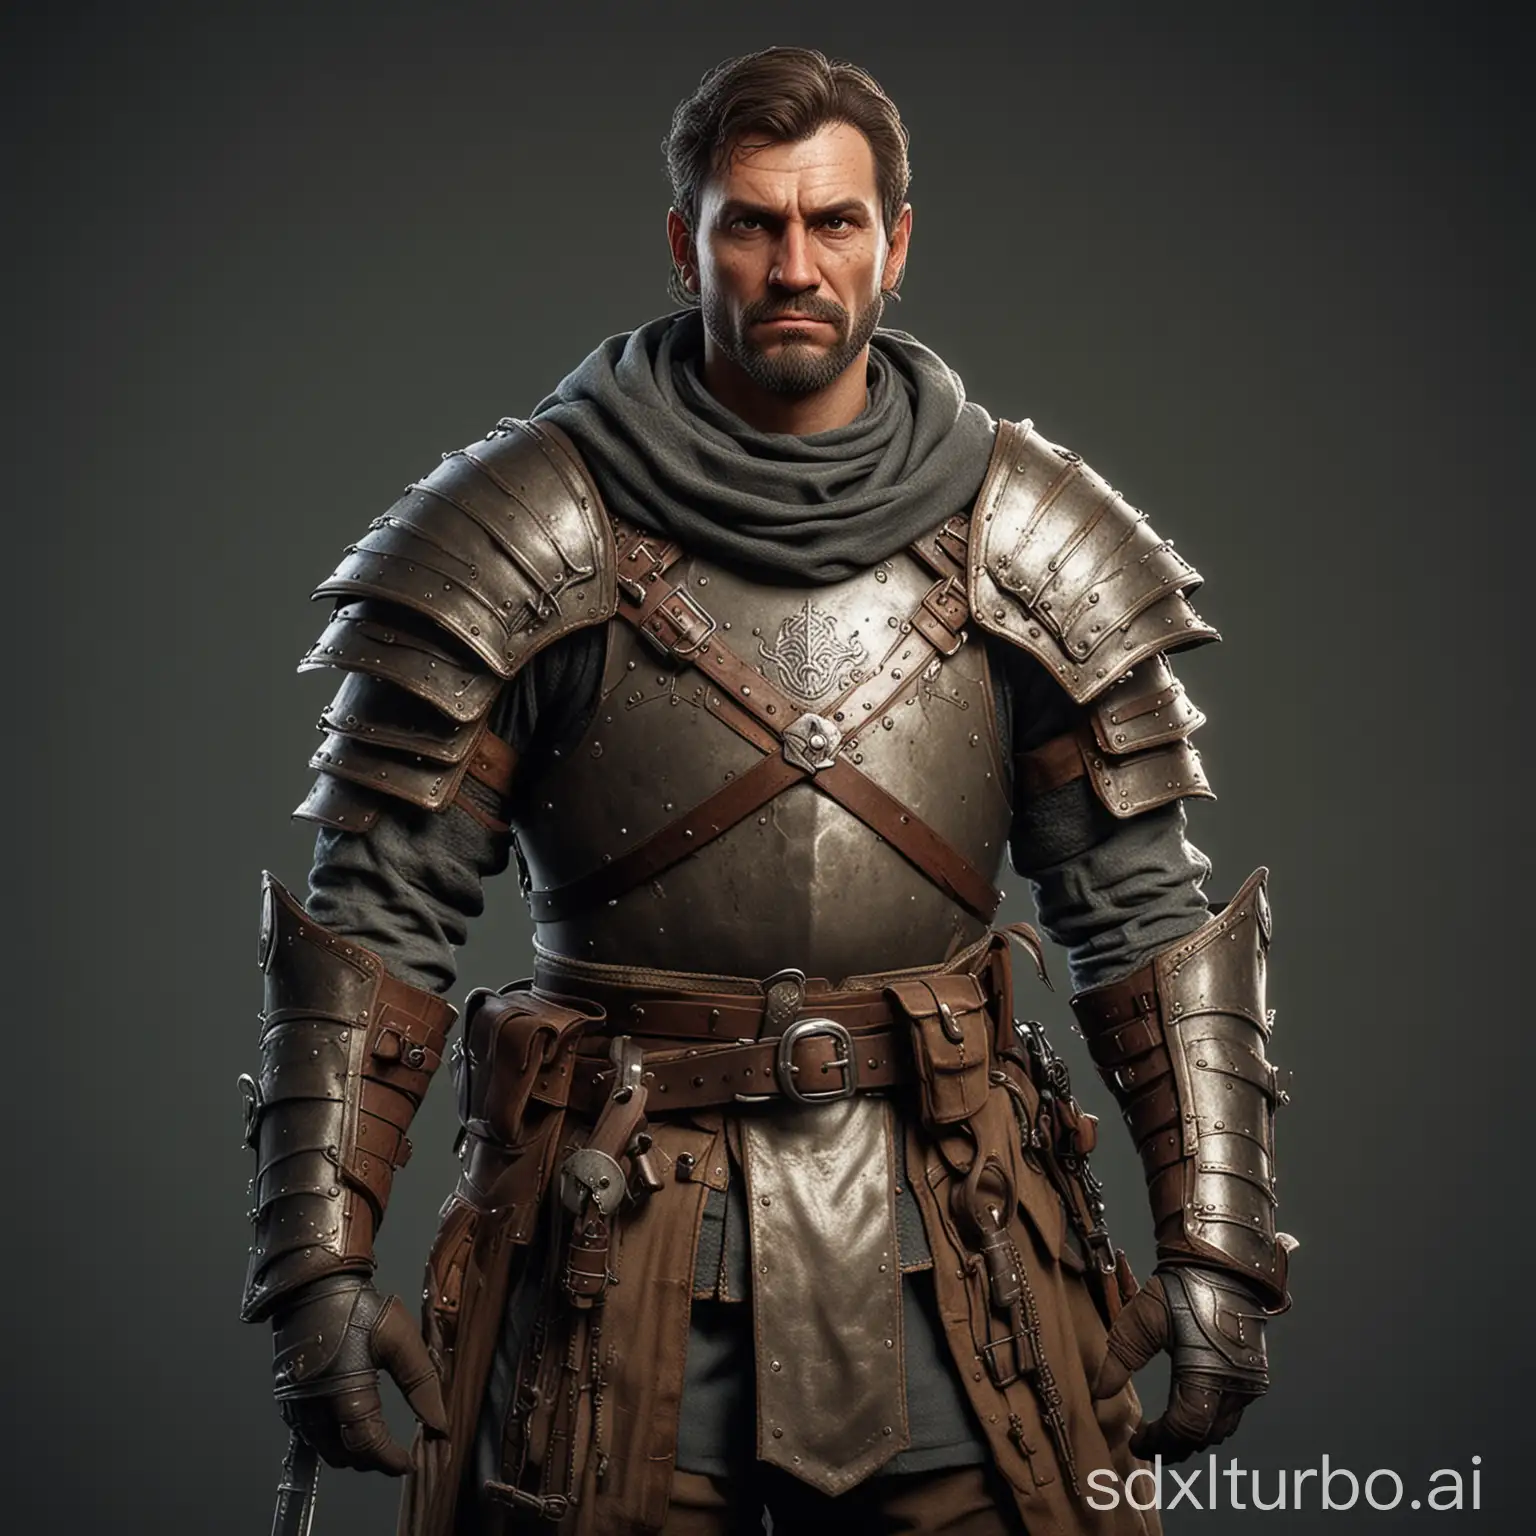 Medieval-Sly-Headhunter-in-Classy-Light-Armor